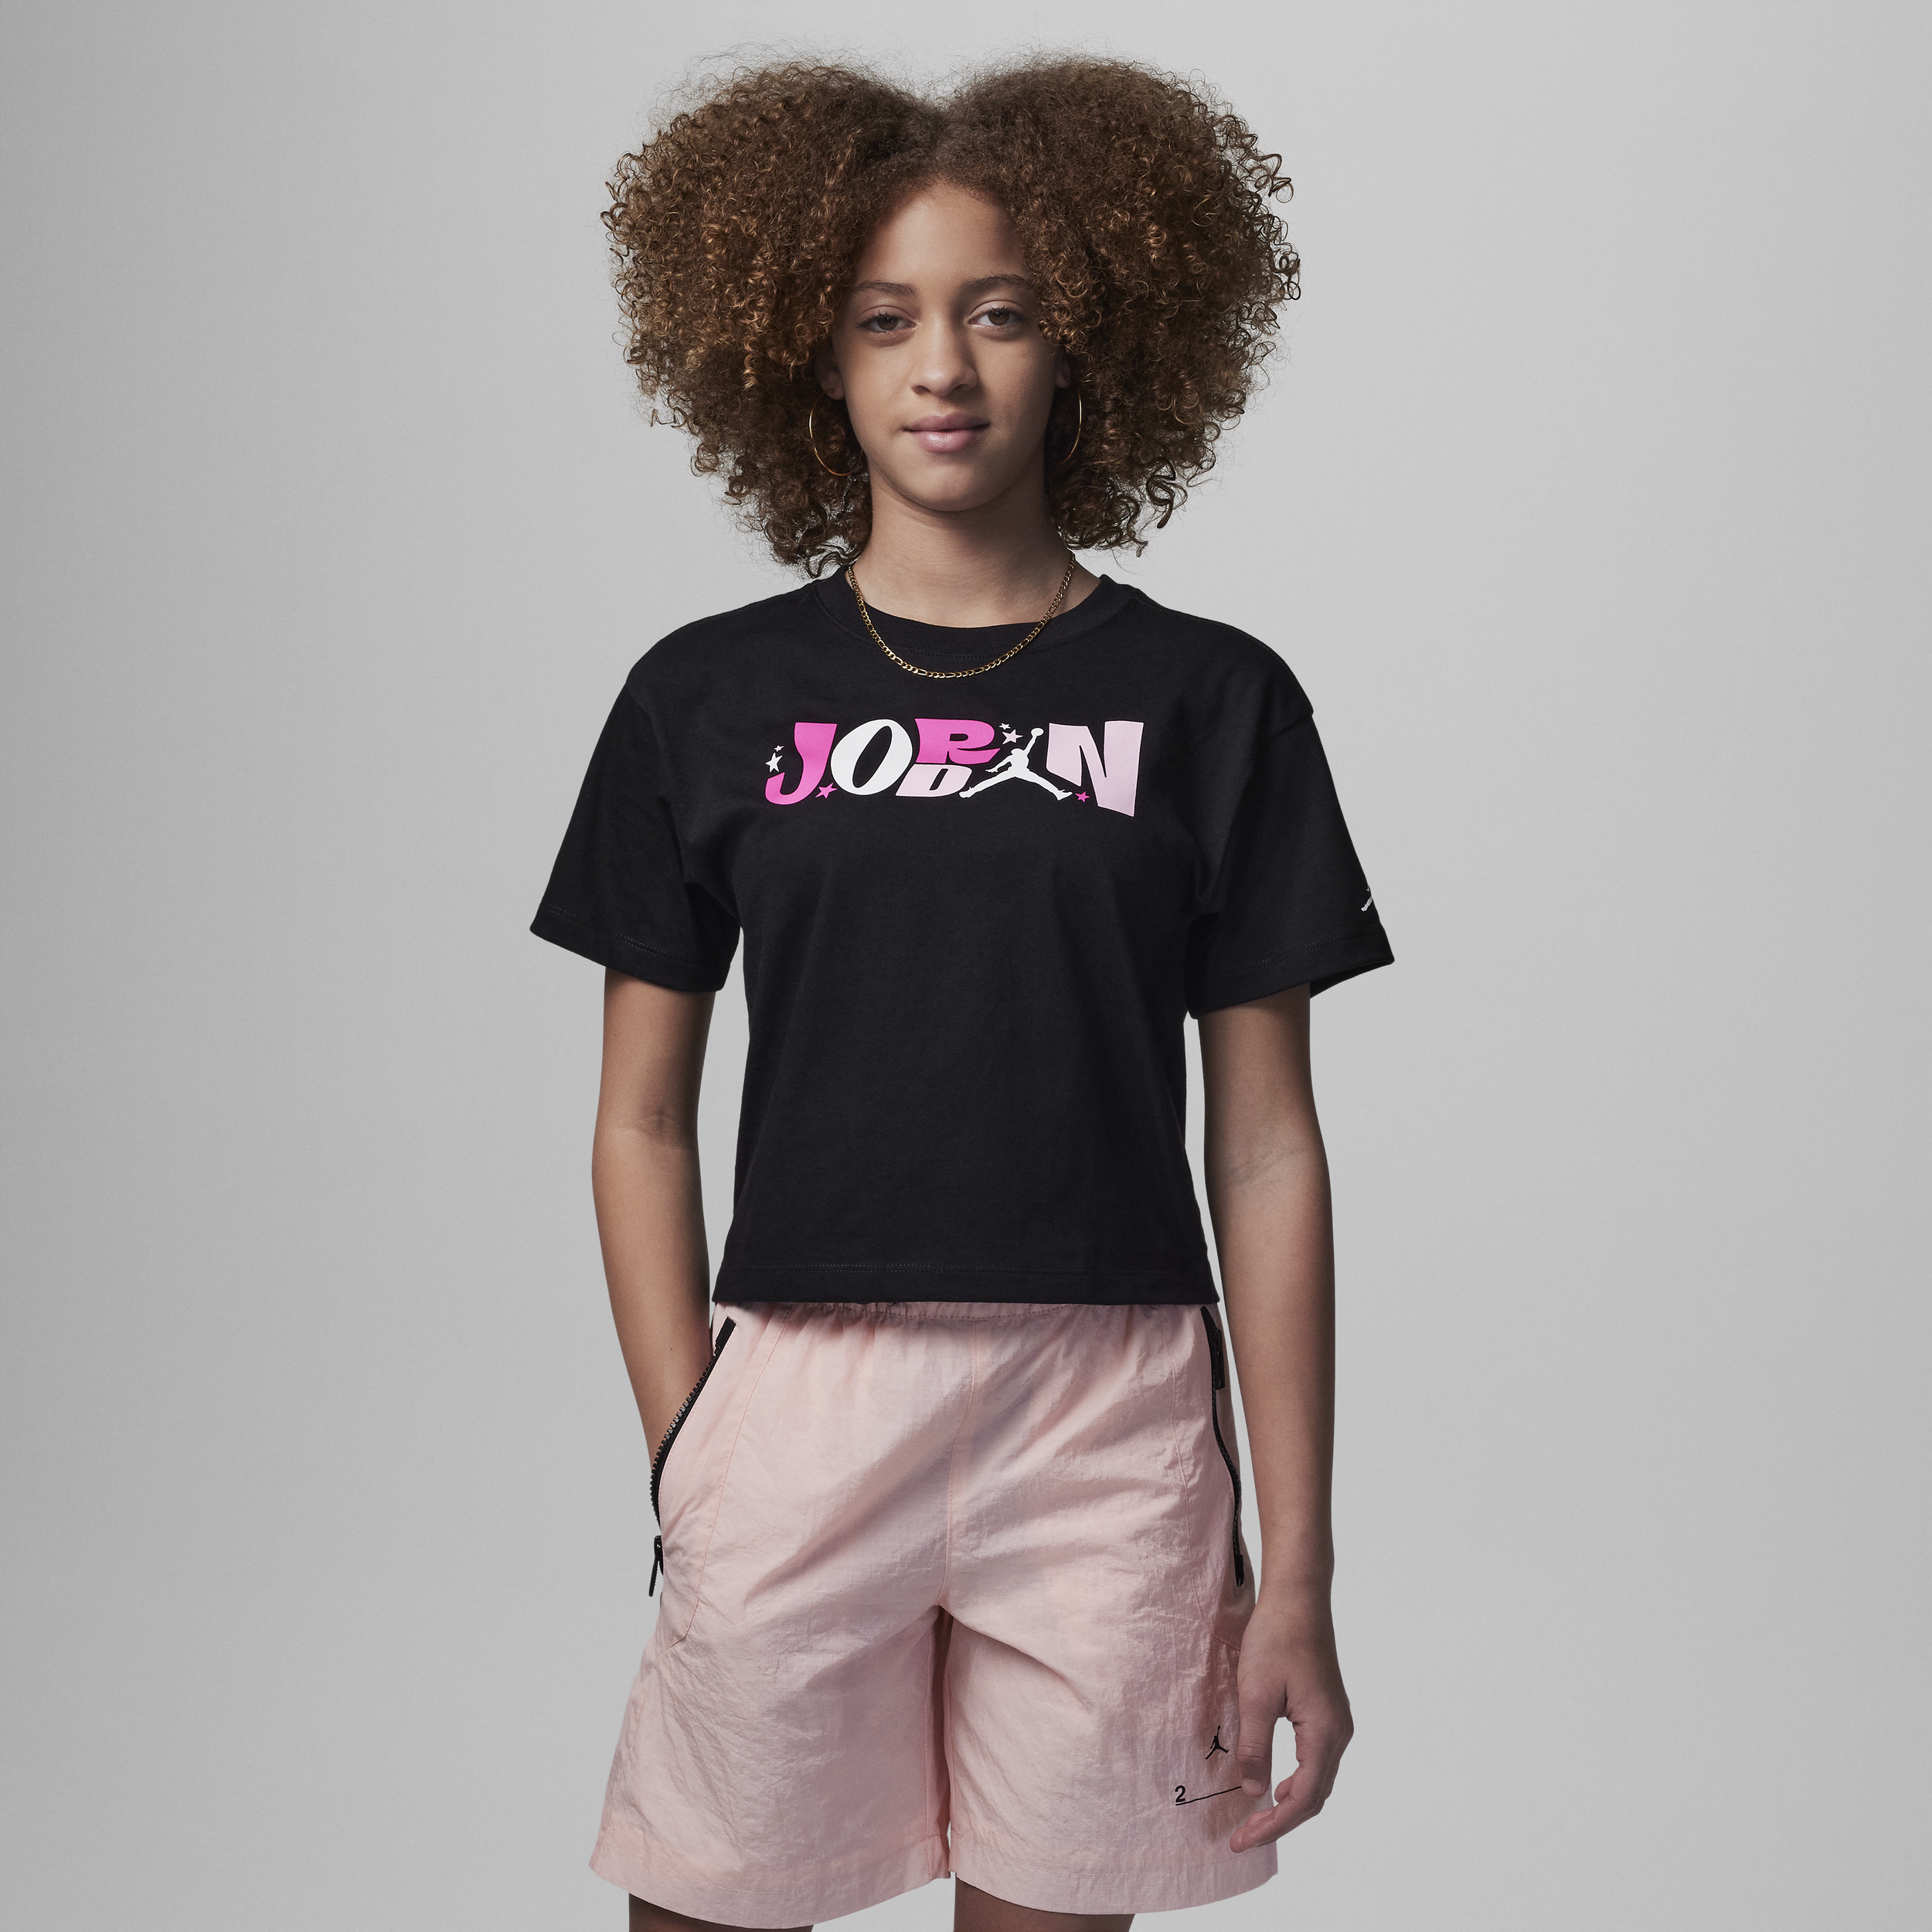 Jordan All Star Tee T-shirt voor kids - Zwart